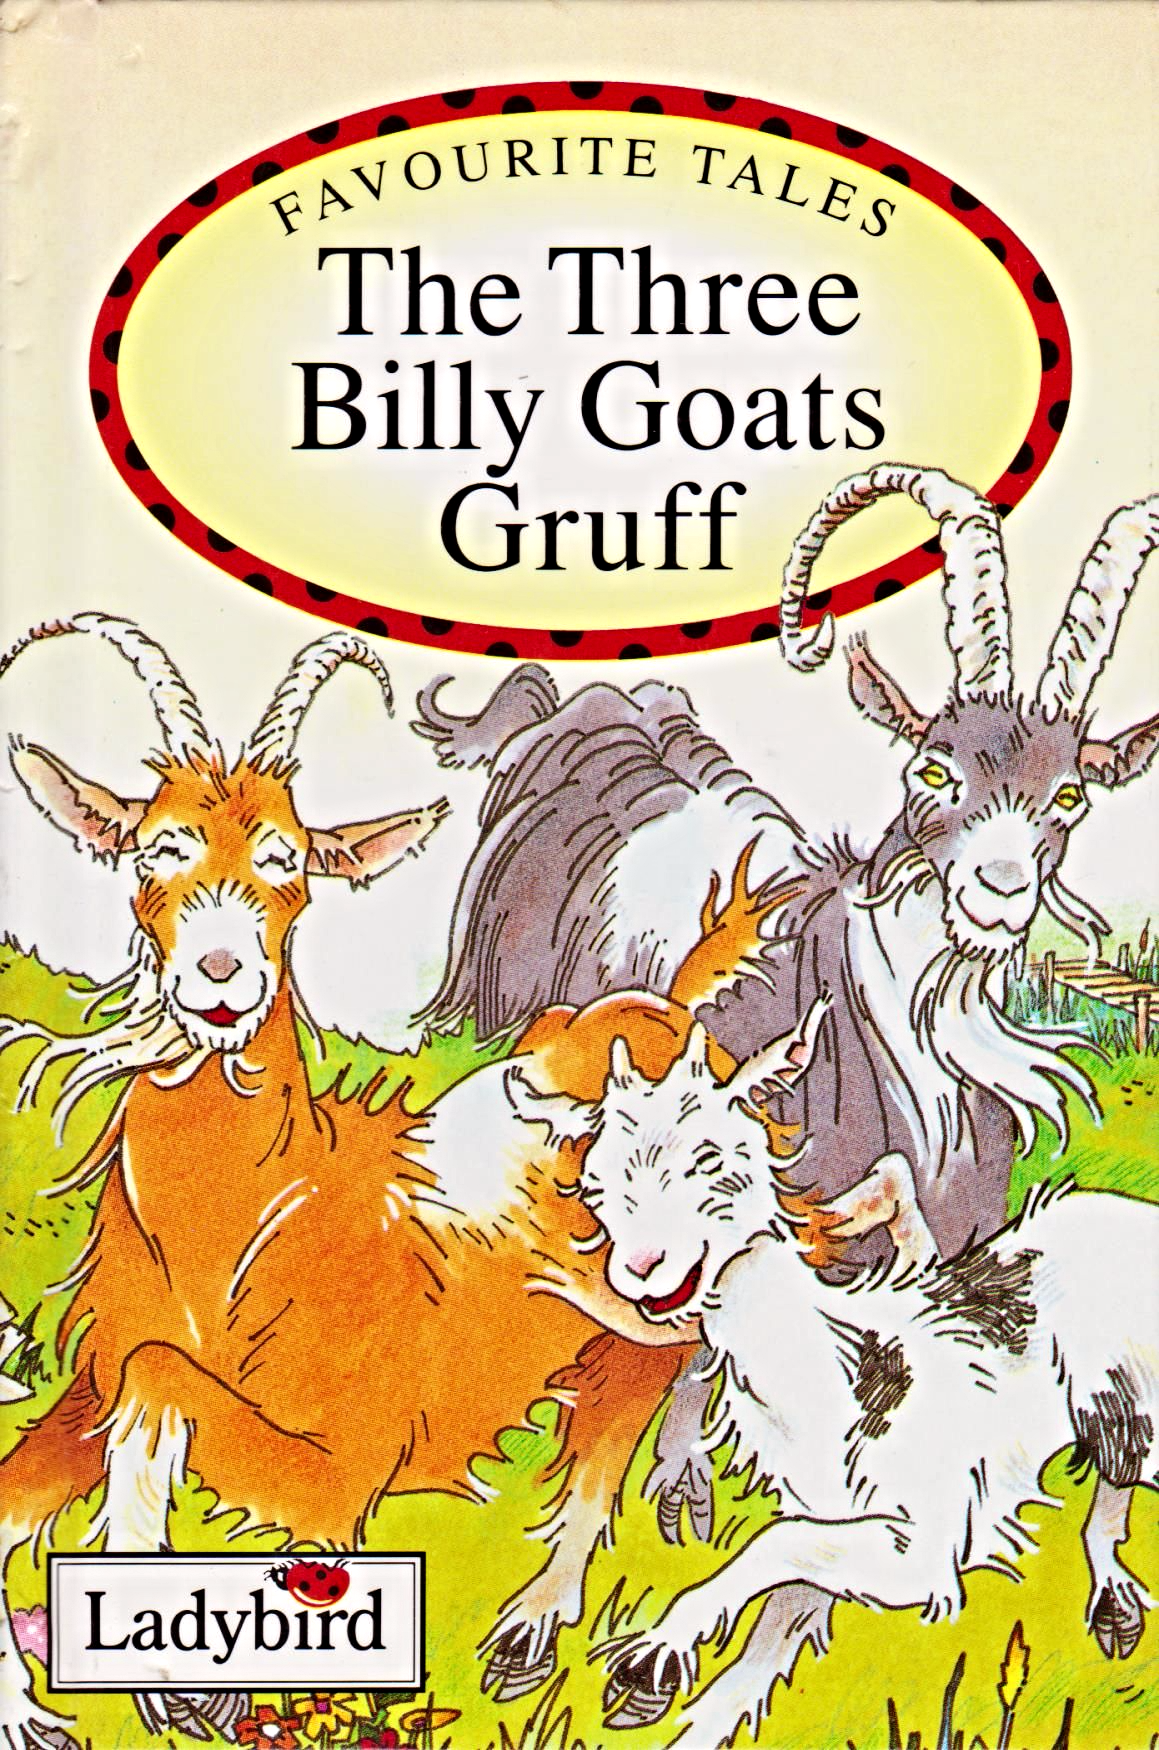 3 billy goats gruff story ele